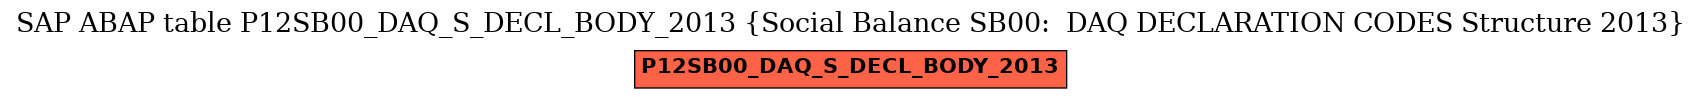 E-R Diagram for table P12SB00_DAQ_S_DECL_BODY_2013 (Social Balance SB00:  DAQ DECLARATION CODES Structure 2013)